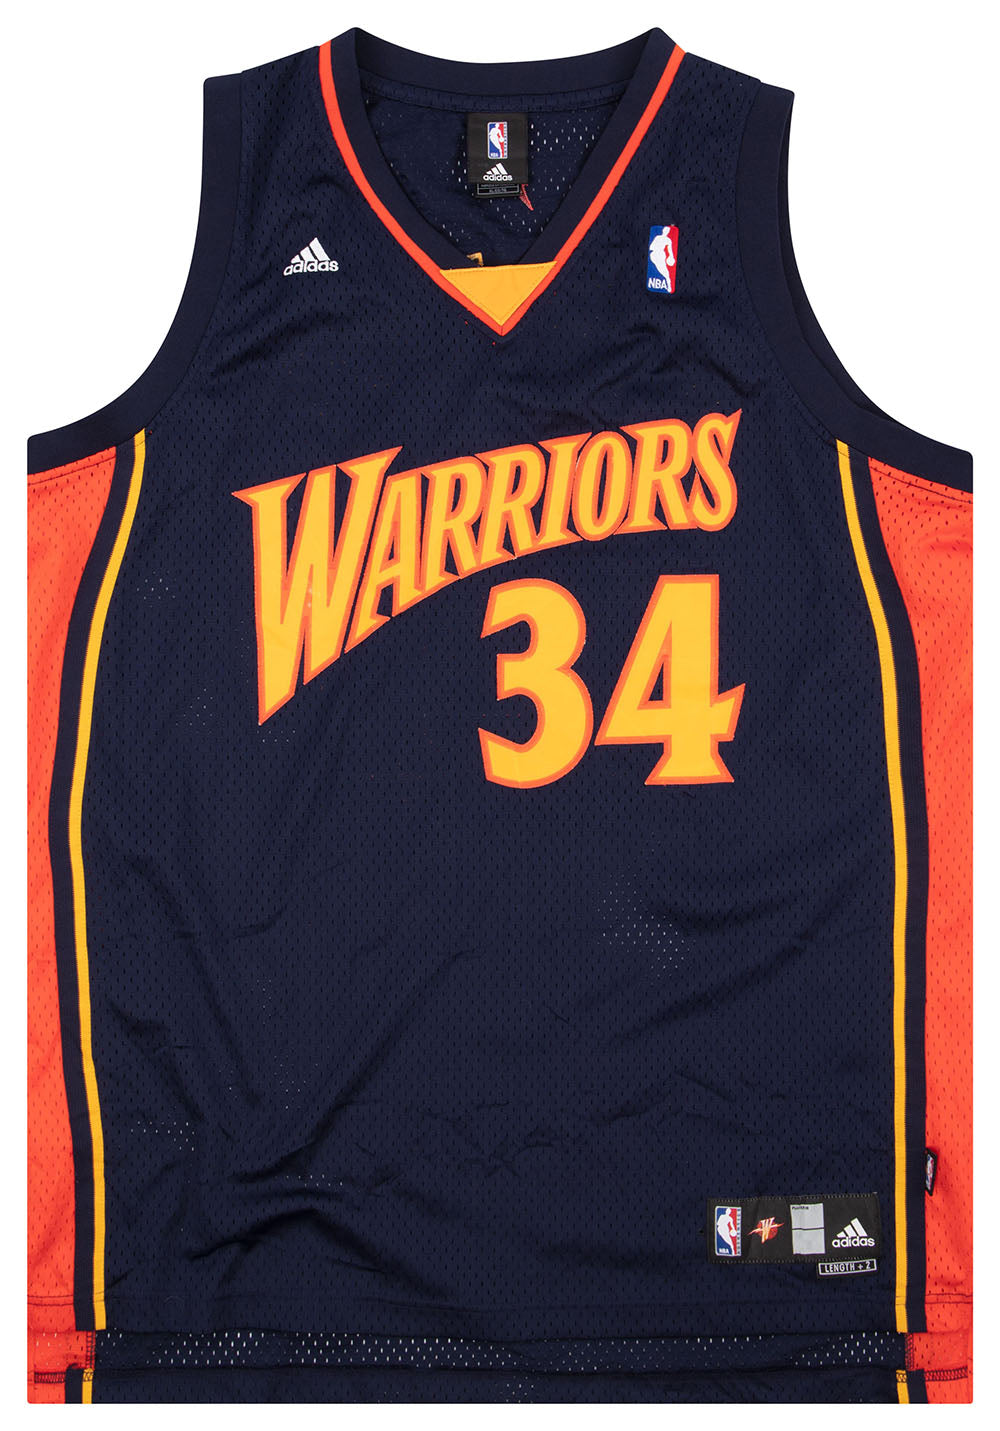 Golden State Warriors adidas NBA Official Swingman Road Jersey